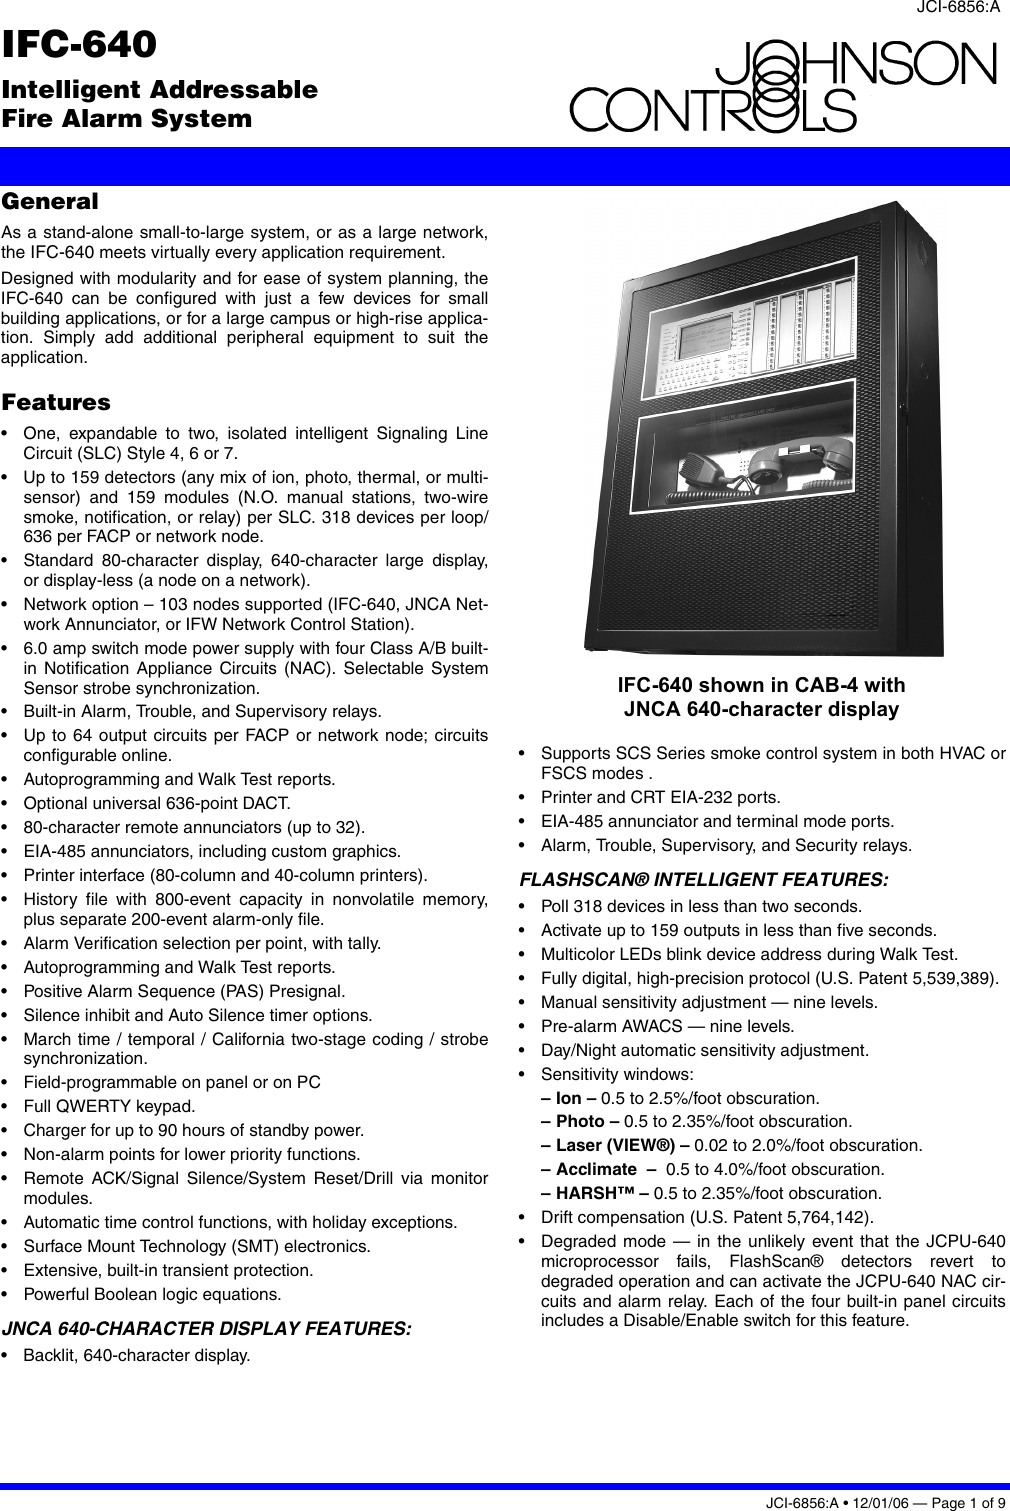 Johnson Controls M500XJ Fire Alarm Isolator Module 